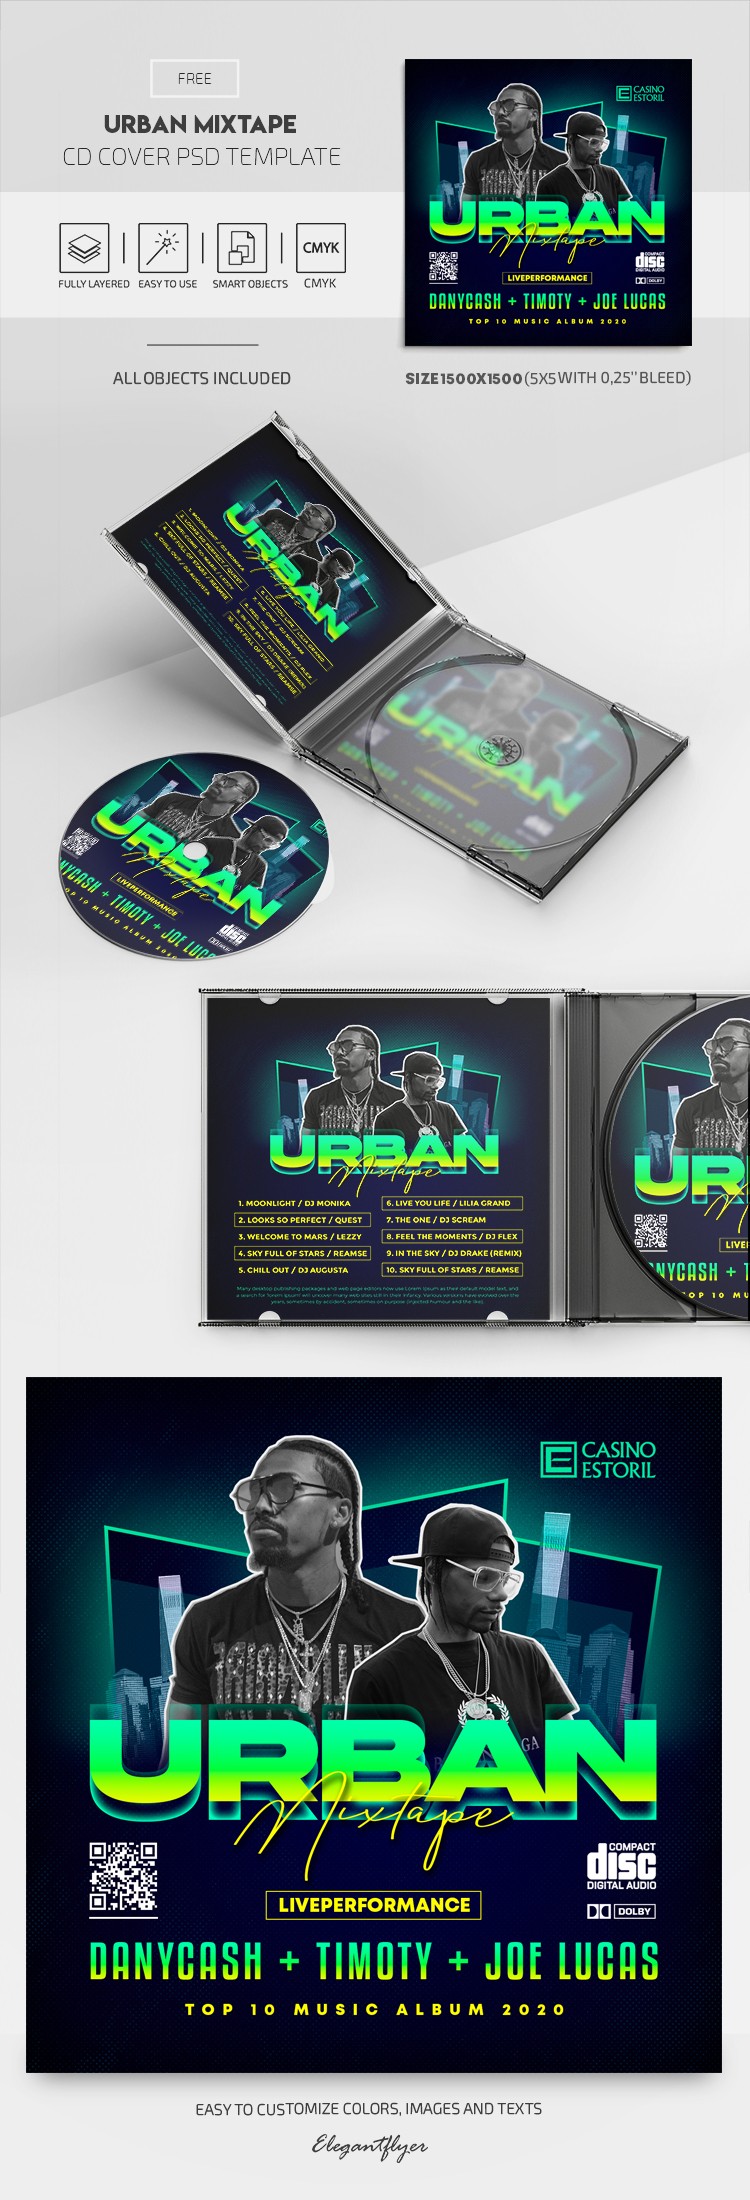 Capa do CD Urban Mixtape by ElegantFlyer